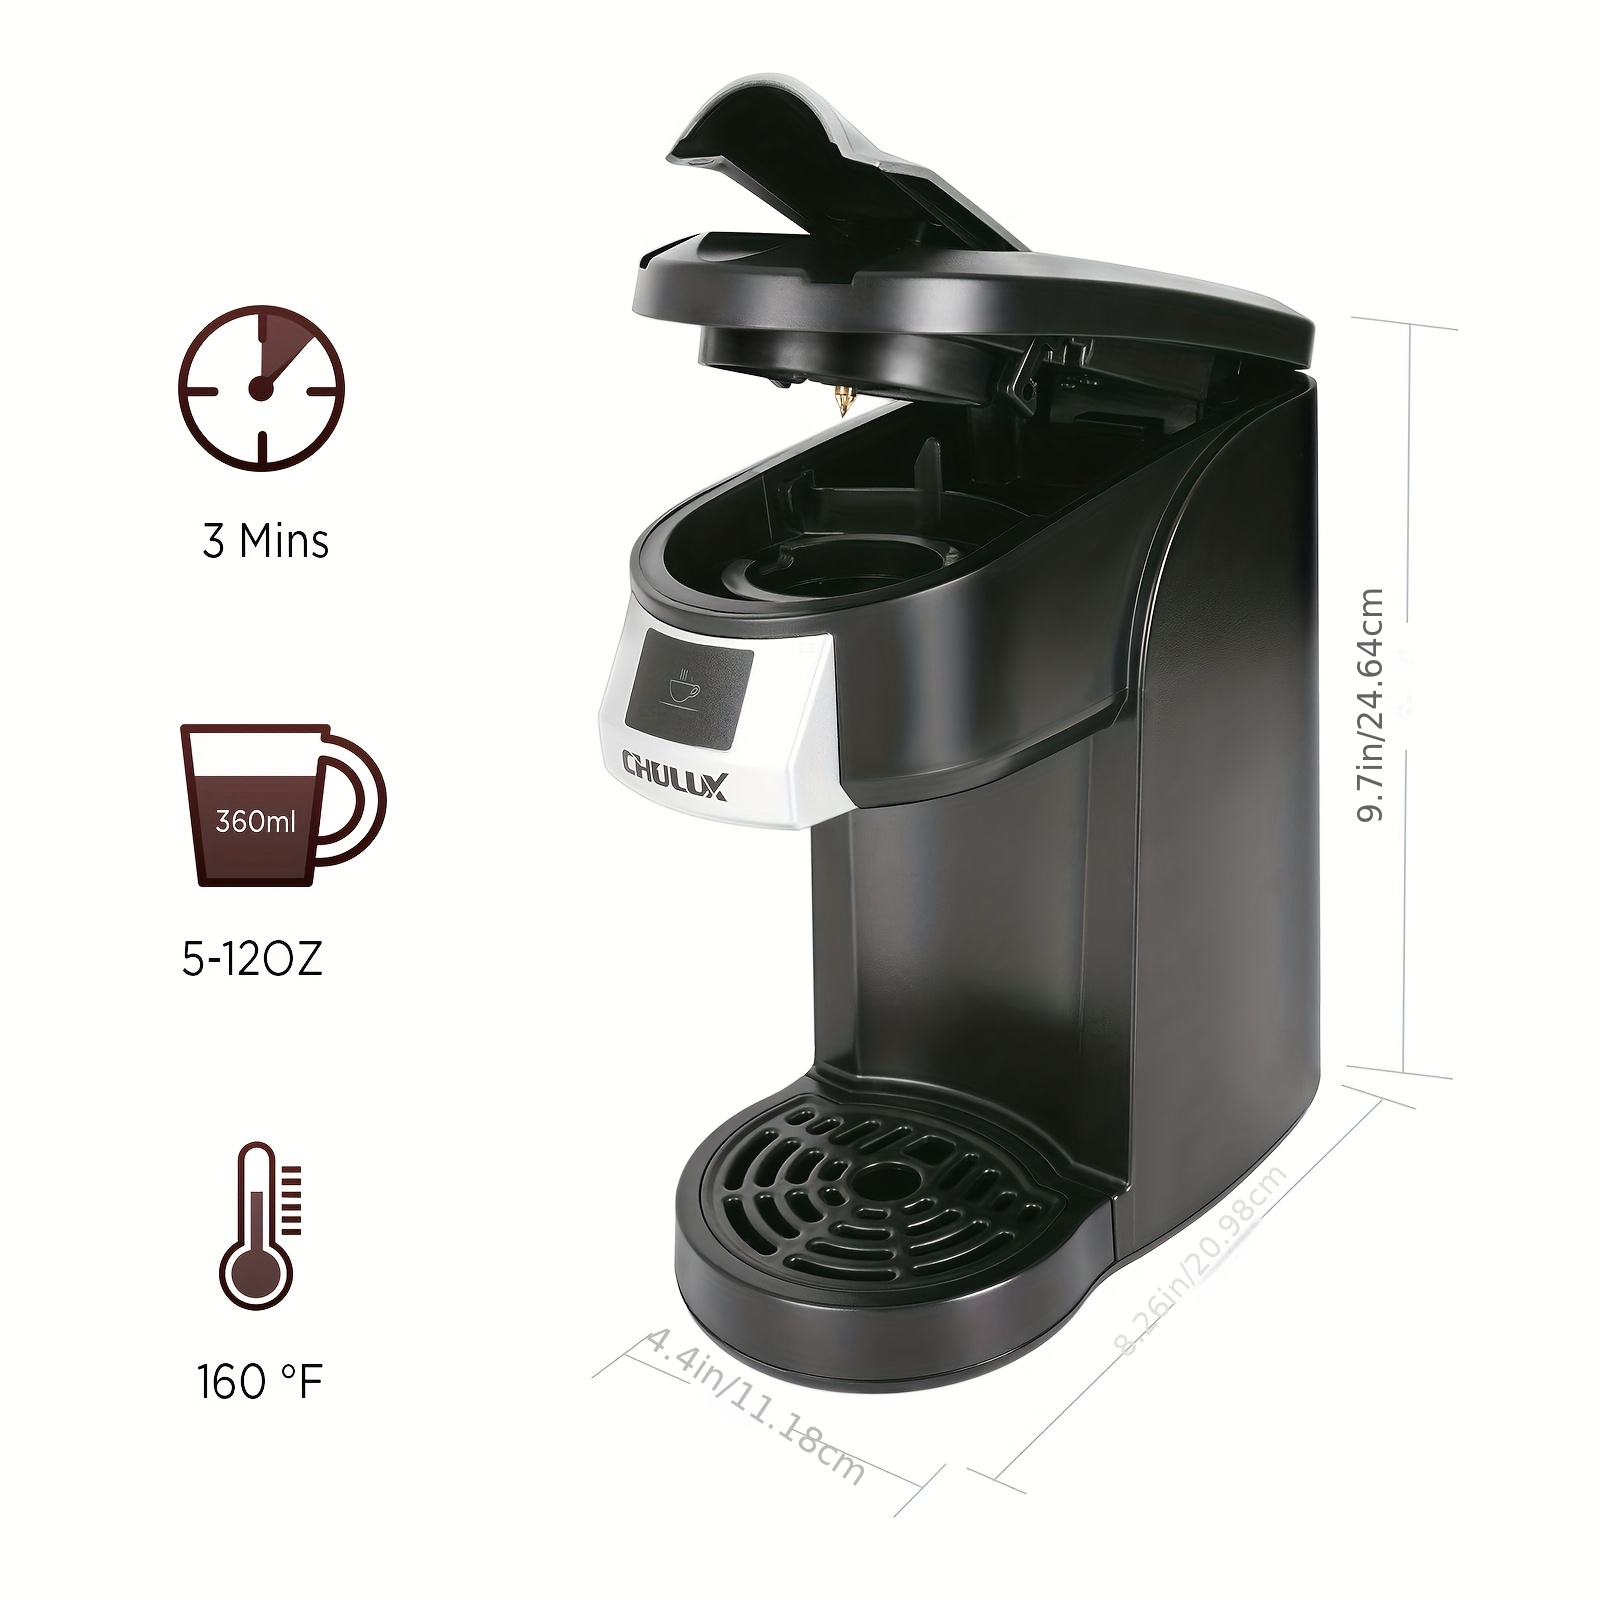 Chulux Single Serve Coffee Maker Red Kcup Pod Coffee Brewer - Temu